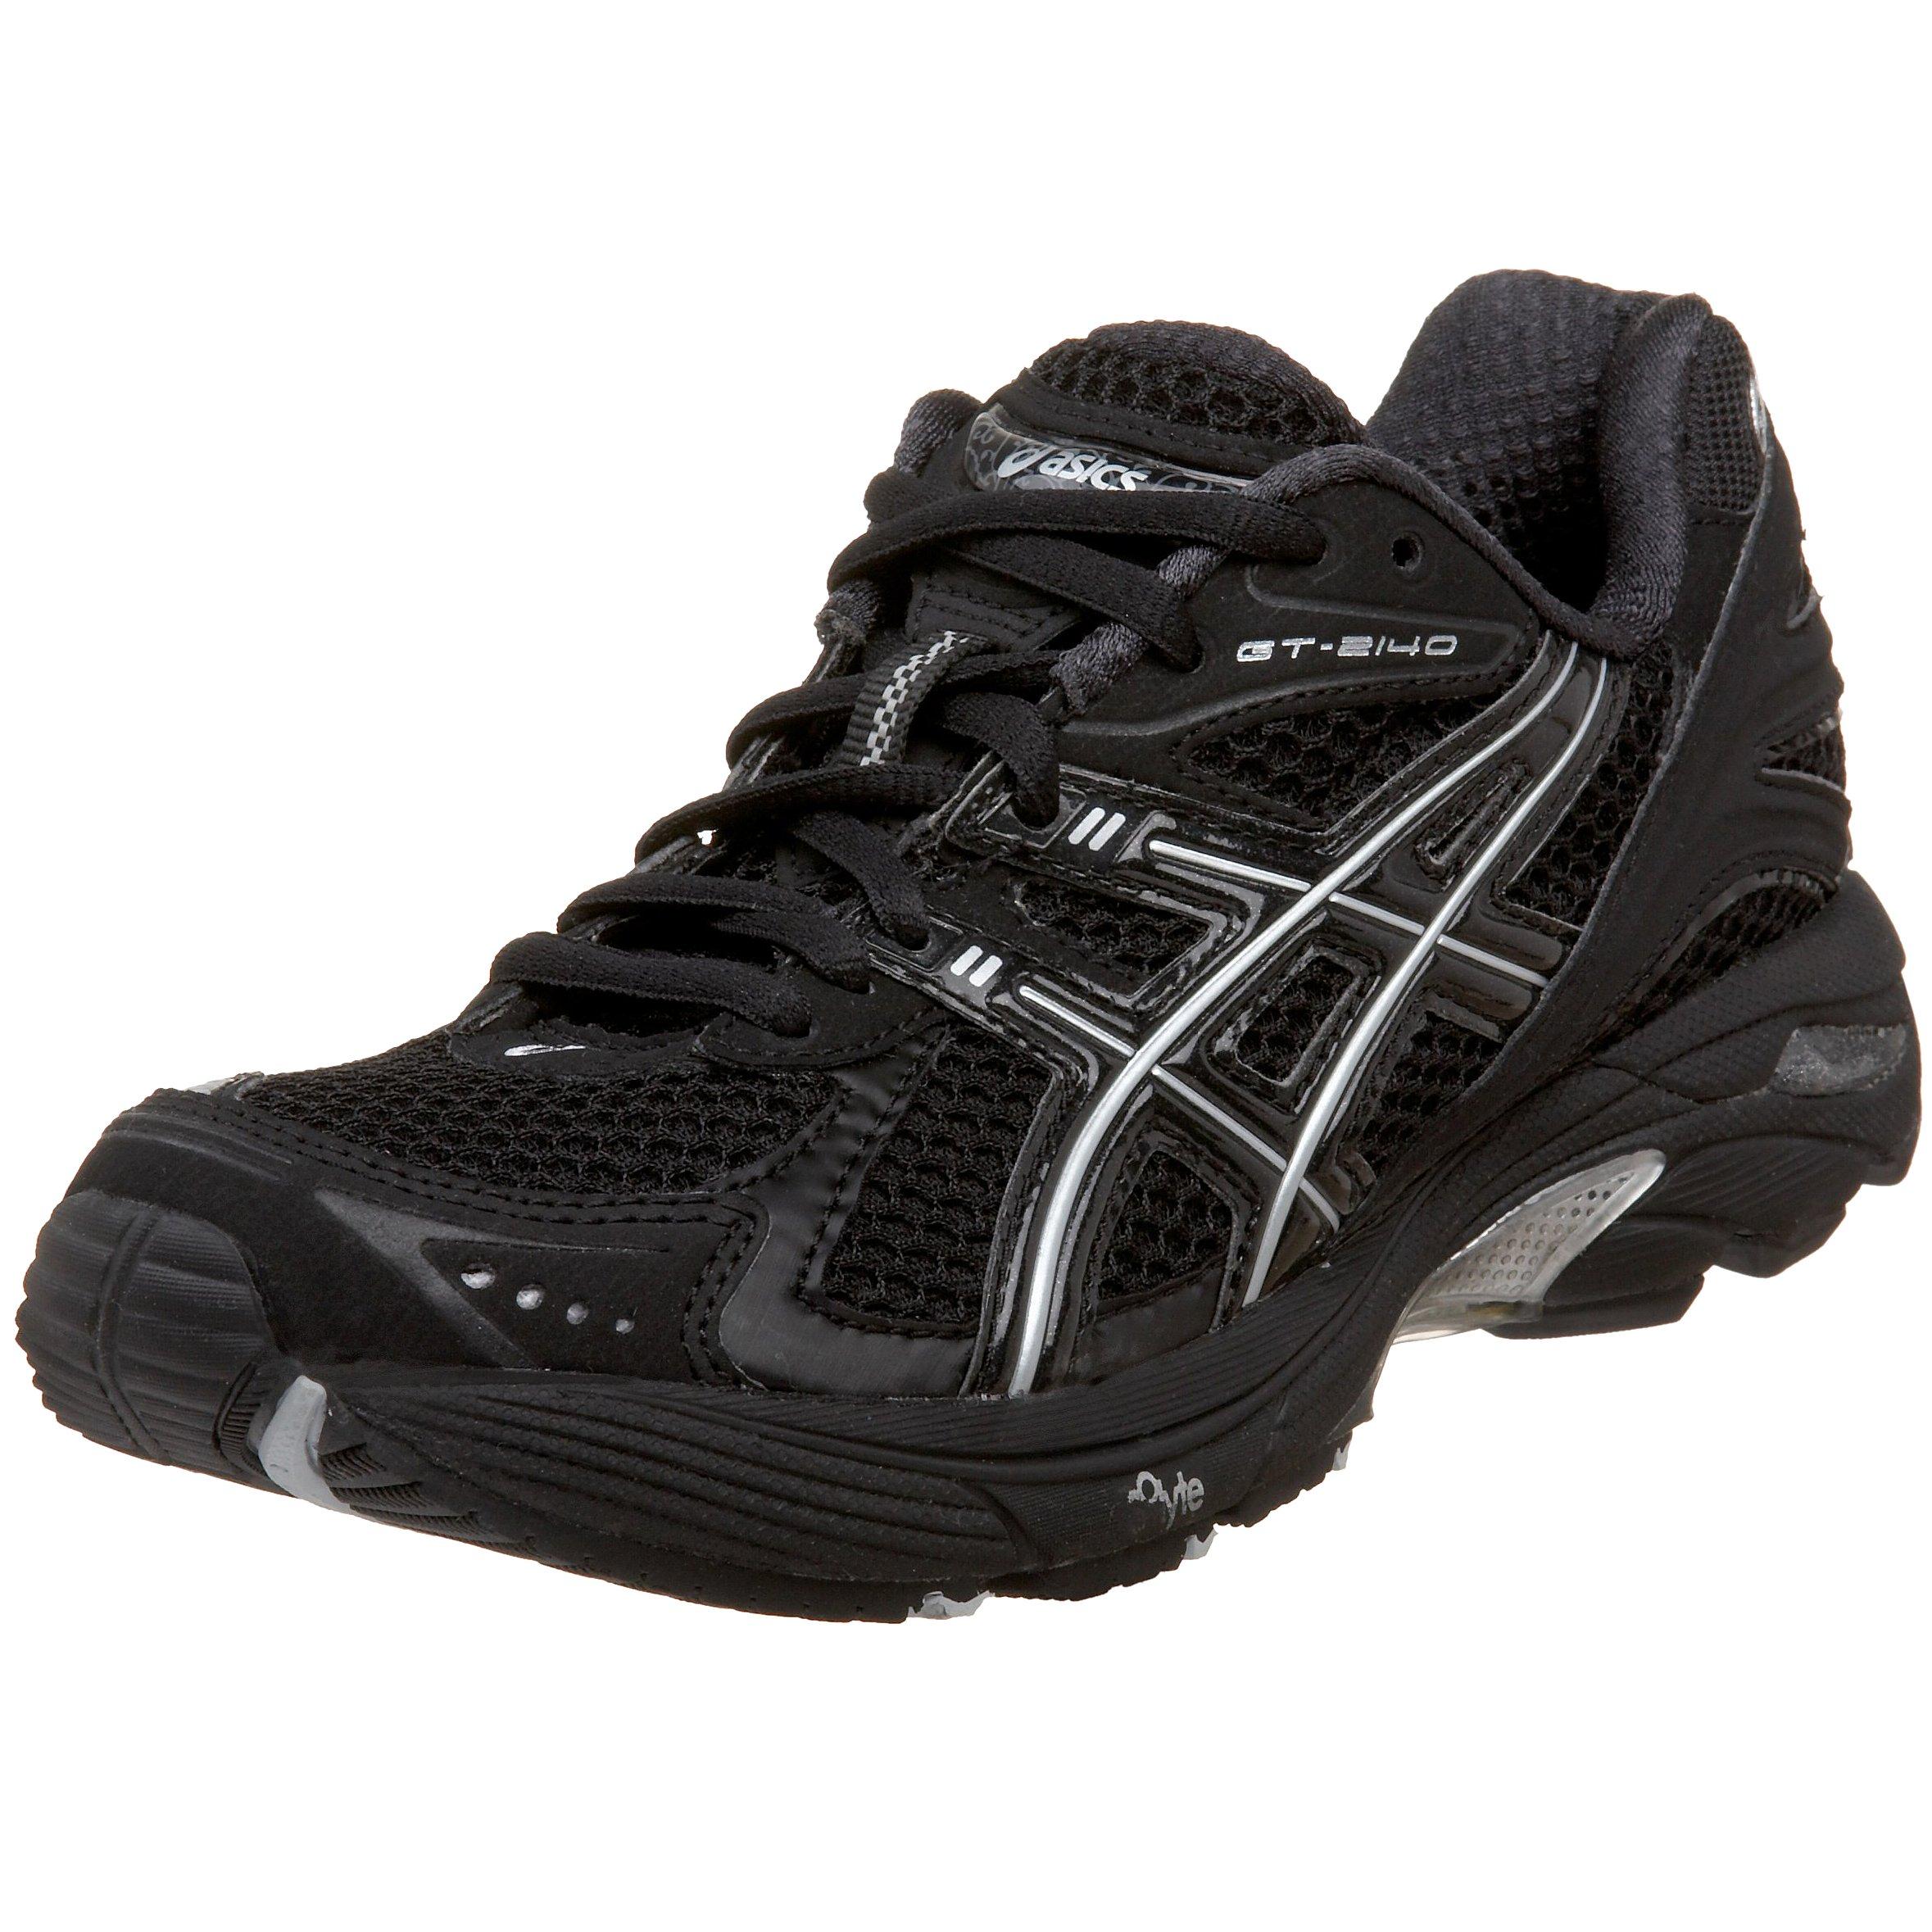 Asics Gt-2140 Running Shoe,onyx/black/lightning,6 Aa Us | Lyst